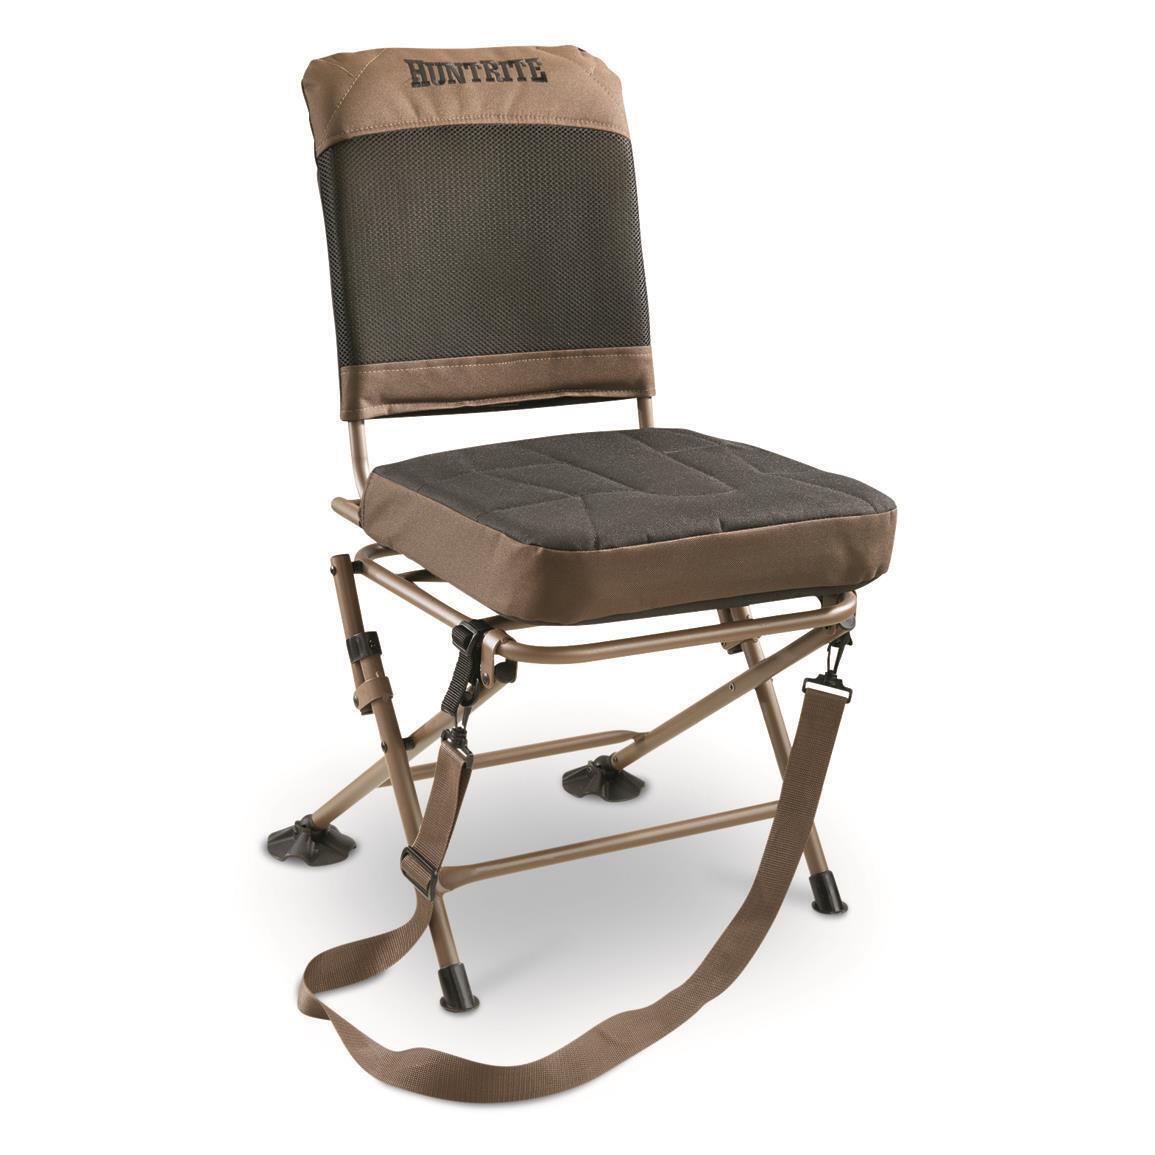 360º Swivel Hunting Blind Chair 300 Lbs Capacity - Cushion Hunting Seat - Brown